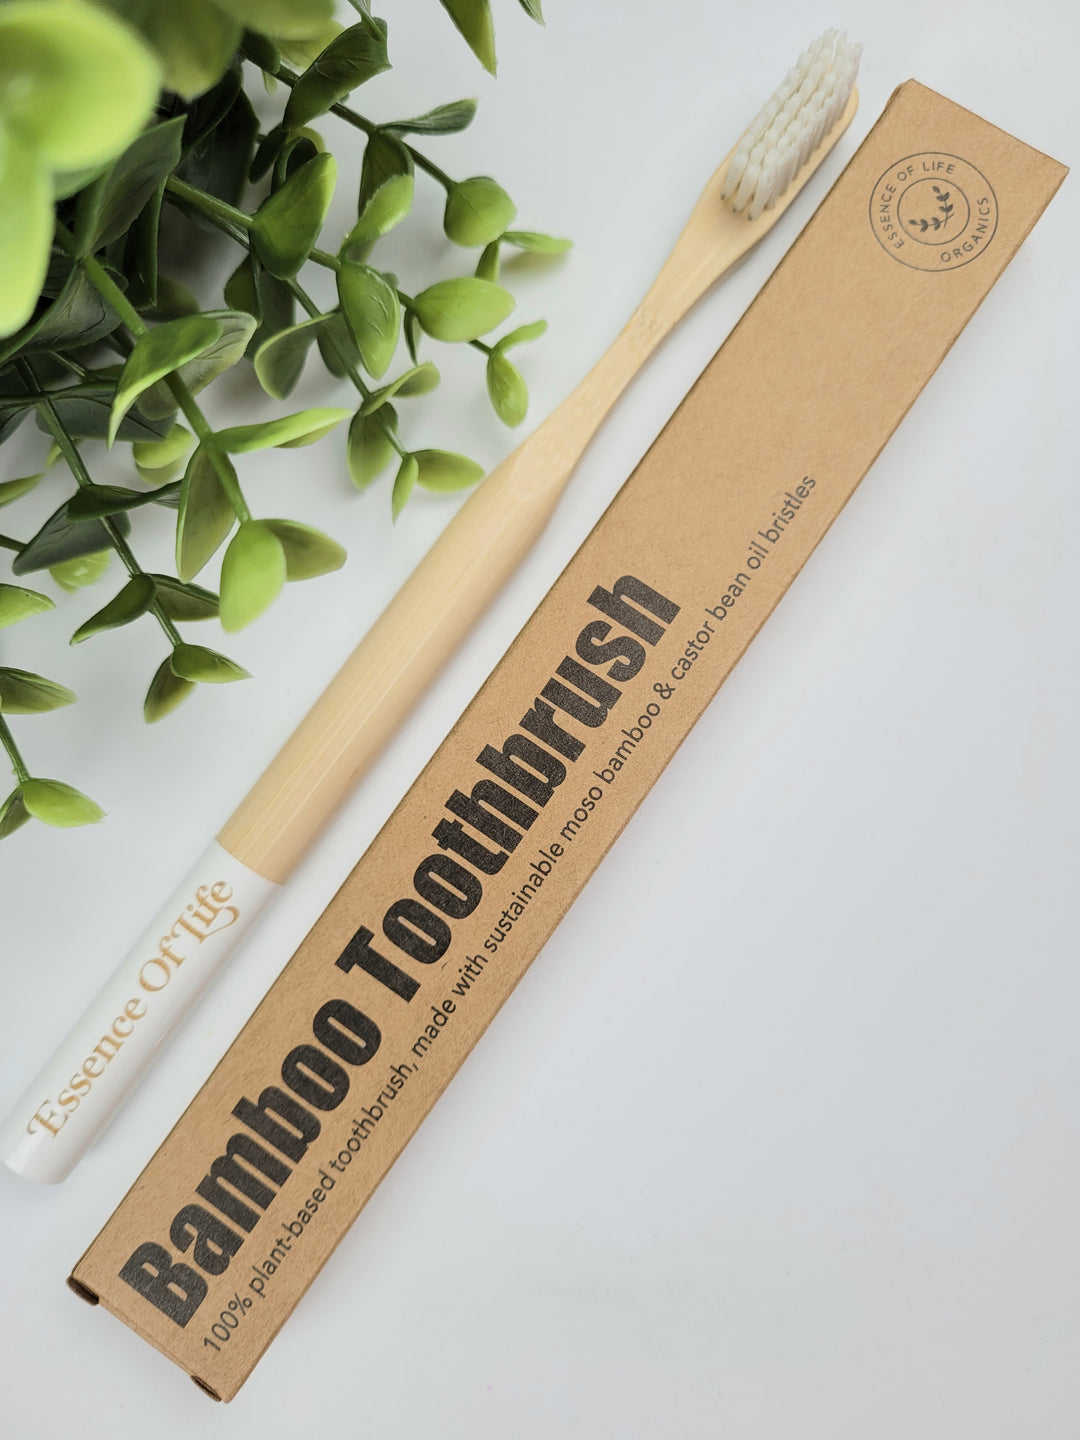 Essence of Life Organics, 100% Plant Based Bamboo Toothbrush